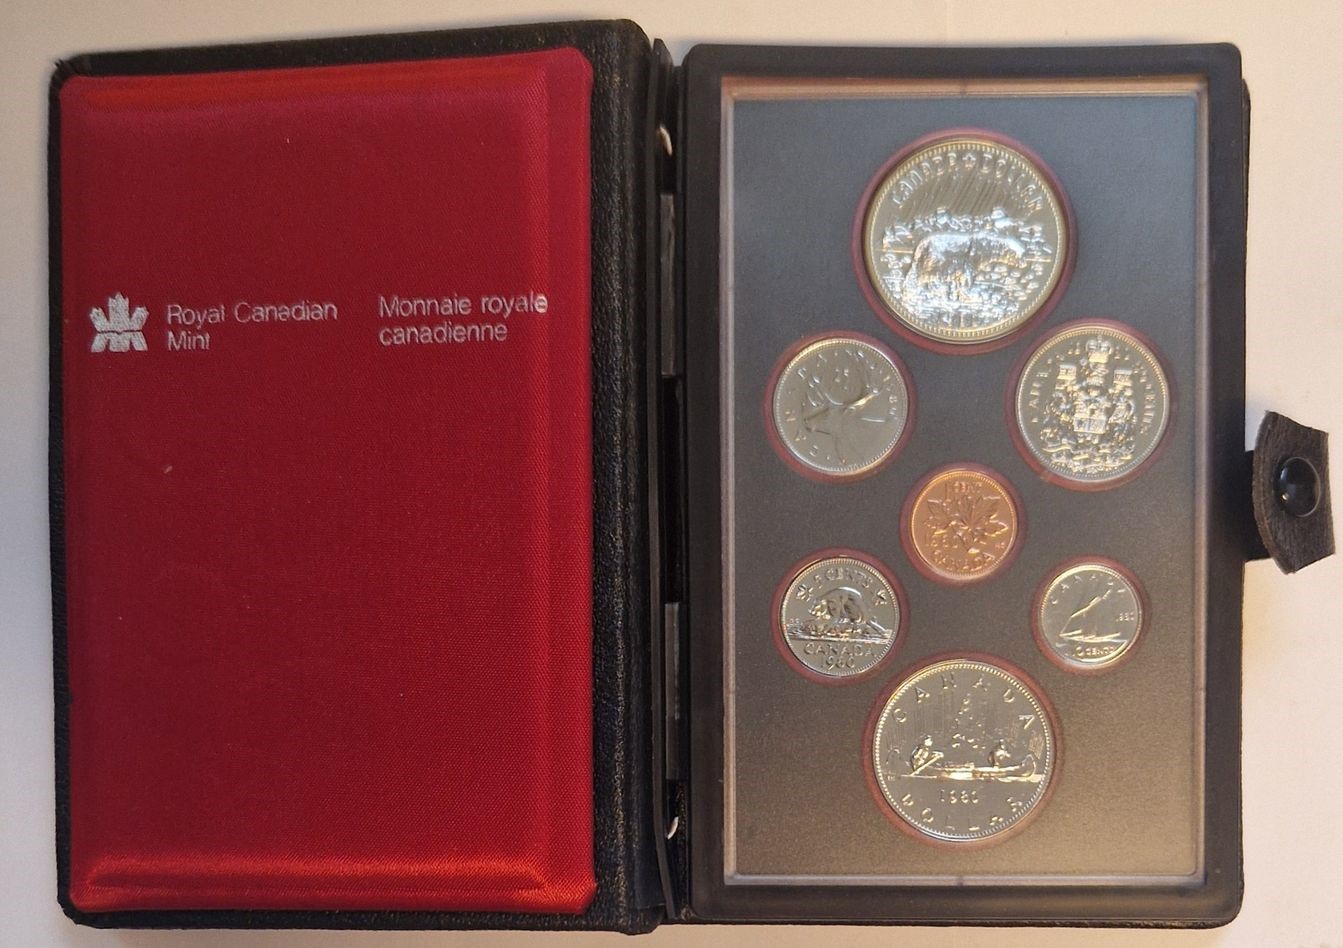  Kanada KMS 1980 1 Cent -1 Dollar Royal Canadian Mint Münzenankauf Koblenz Frank Maurer AD149   